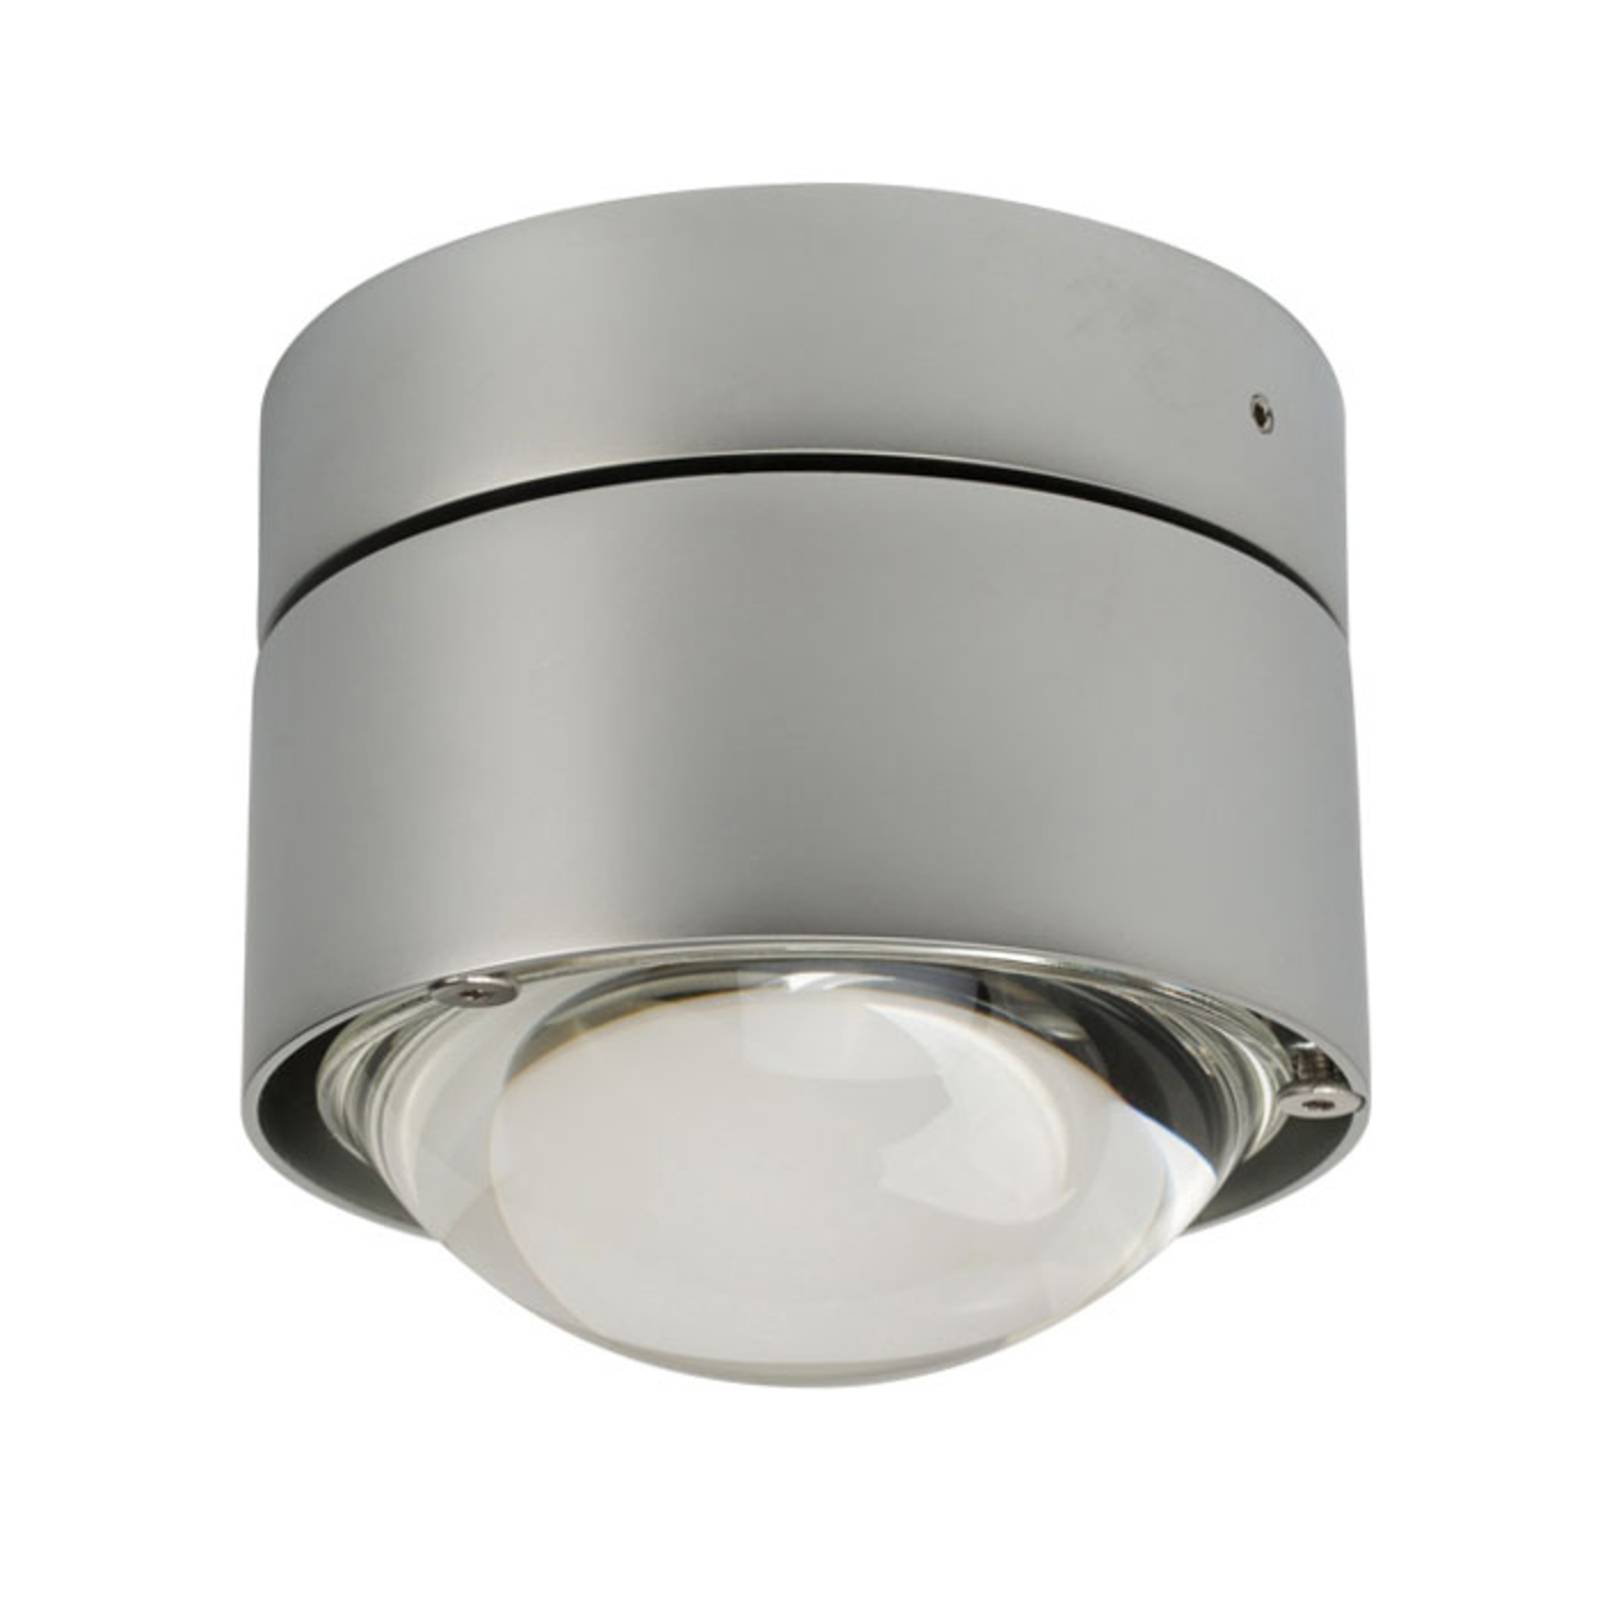 Lampa sufitowa LED Puk Plus , chrom matowy